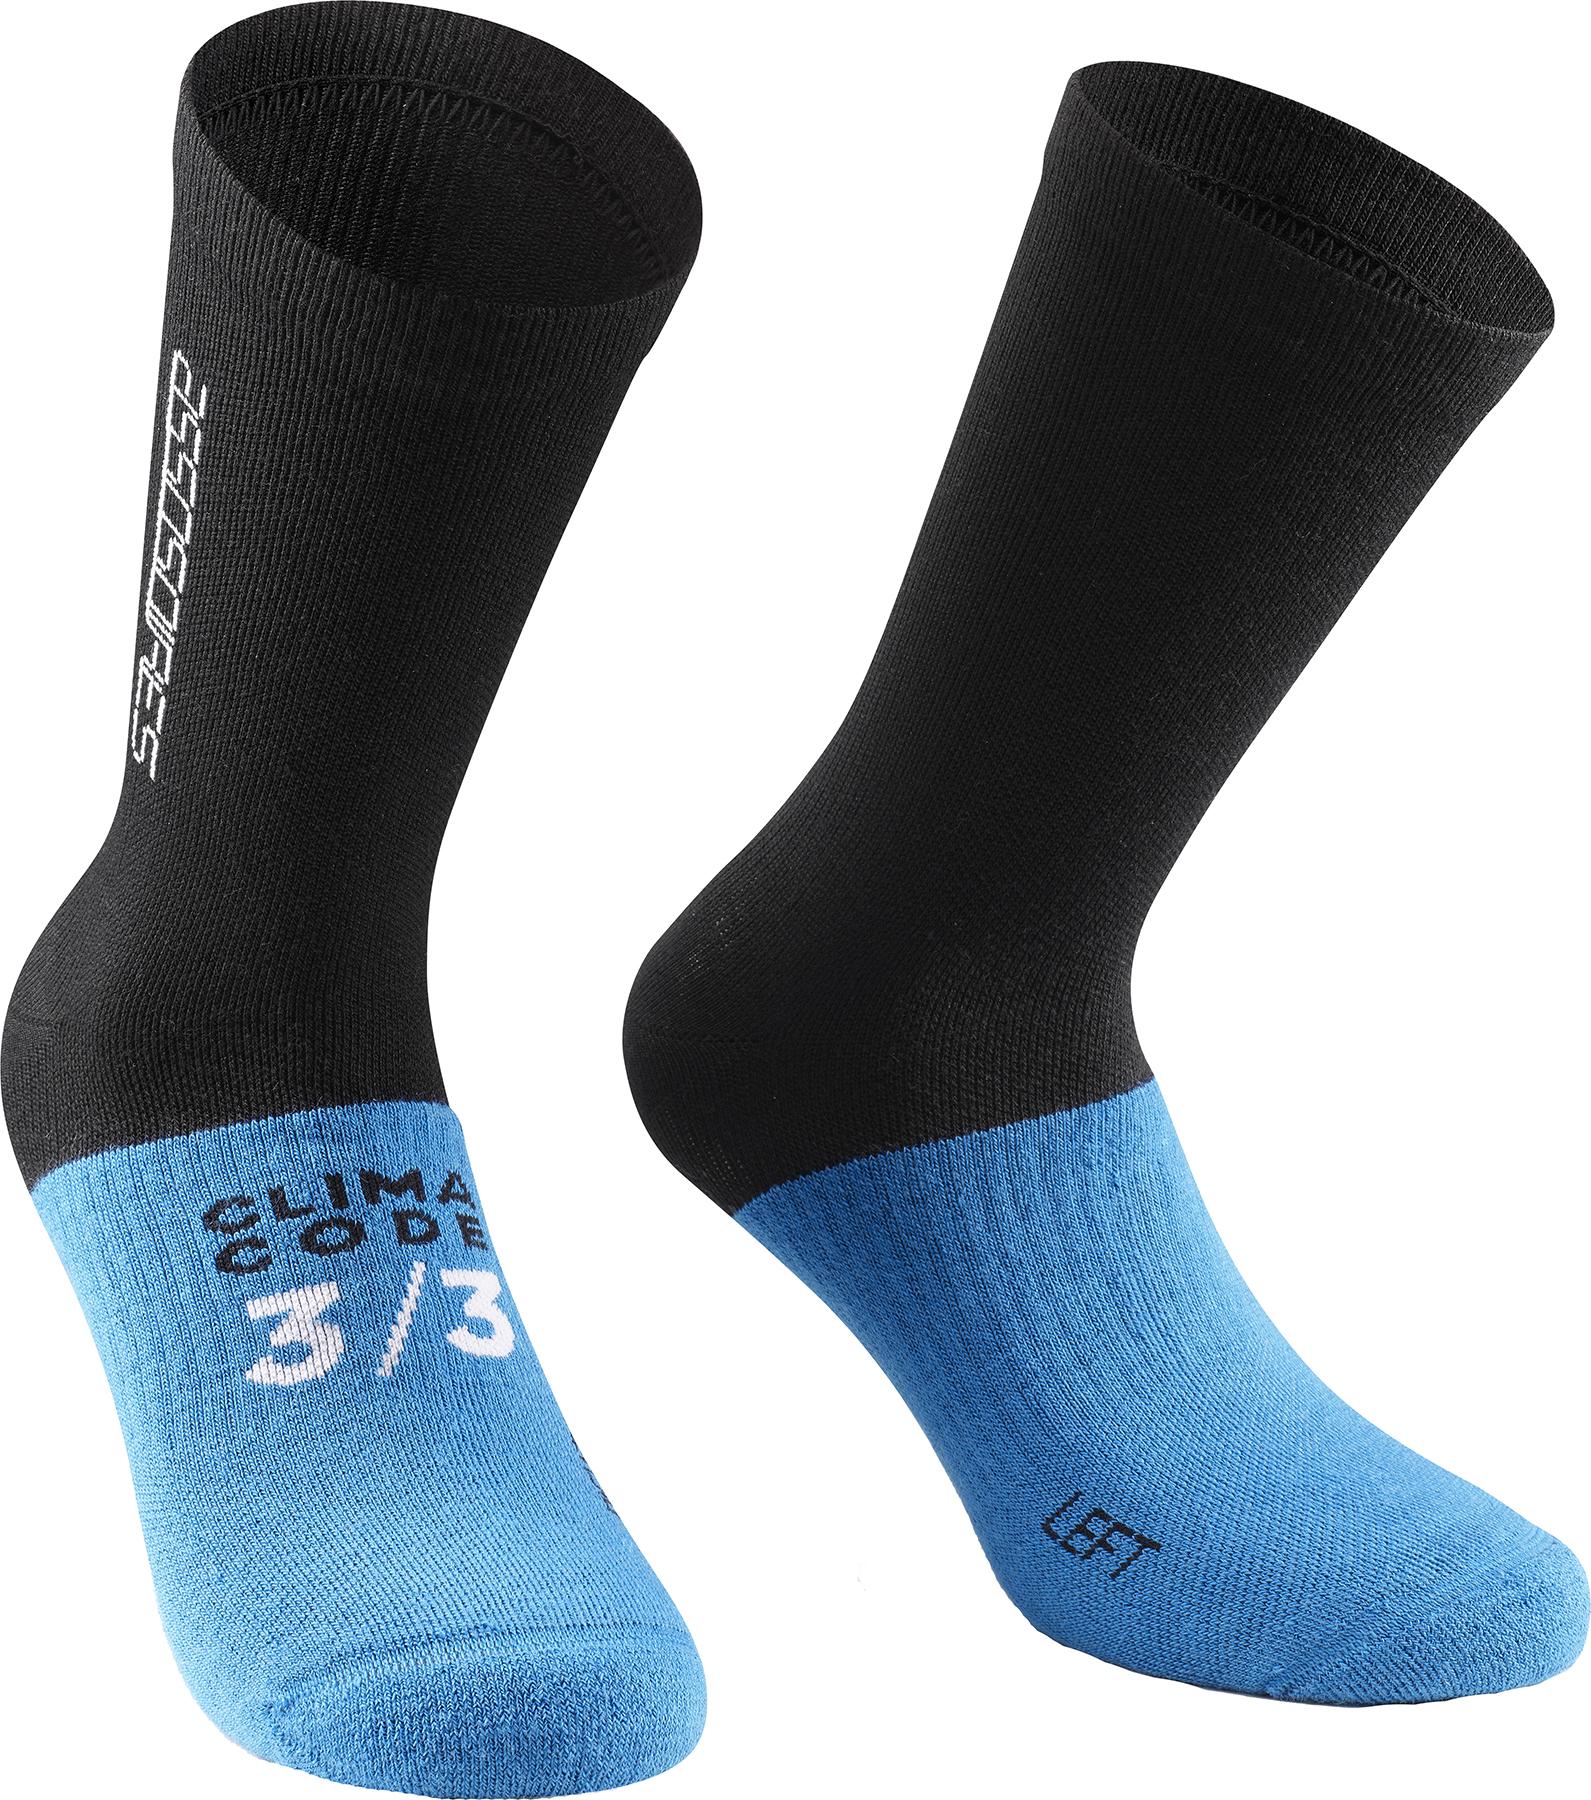 Assos Ultraz Winter Socks Evo - Black Series